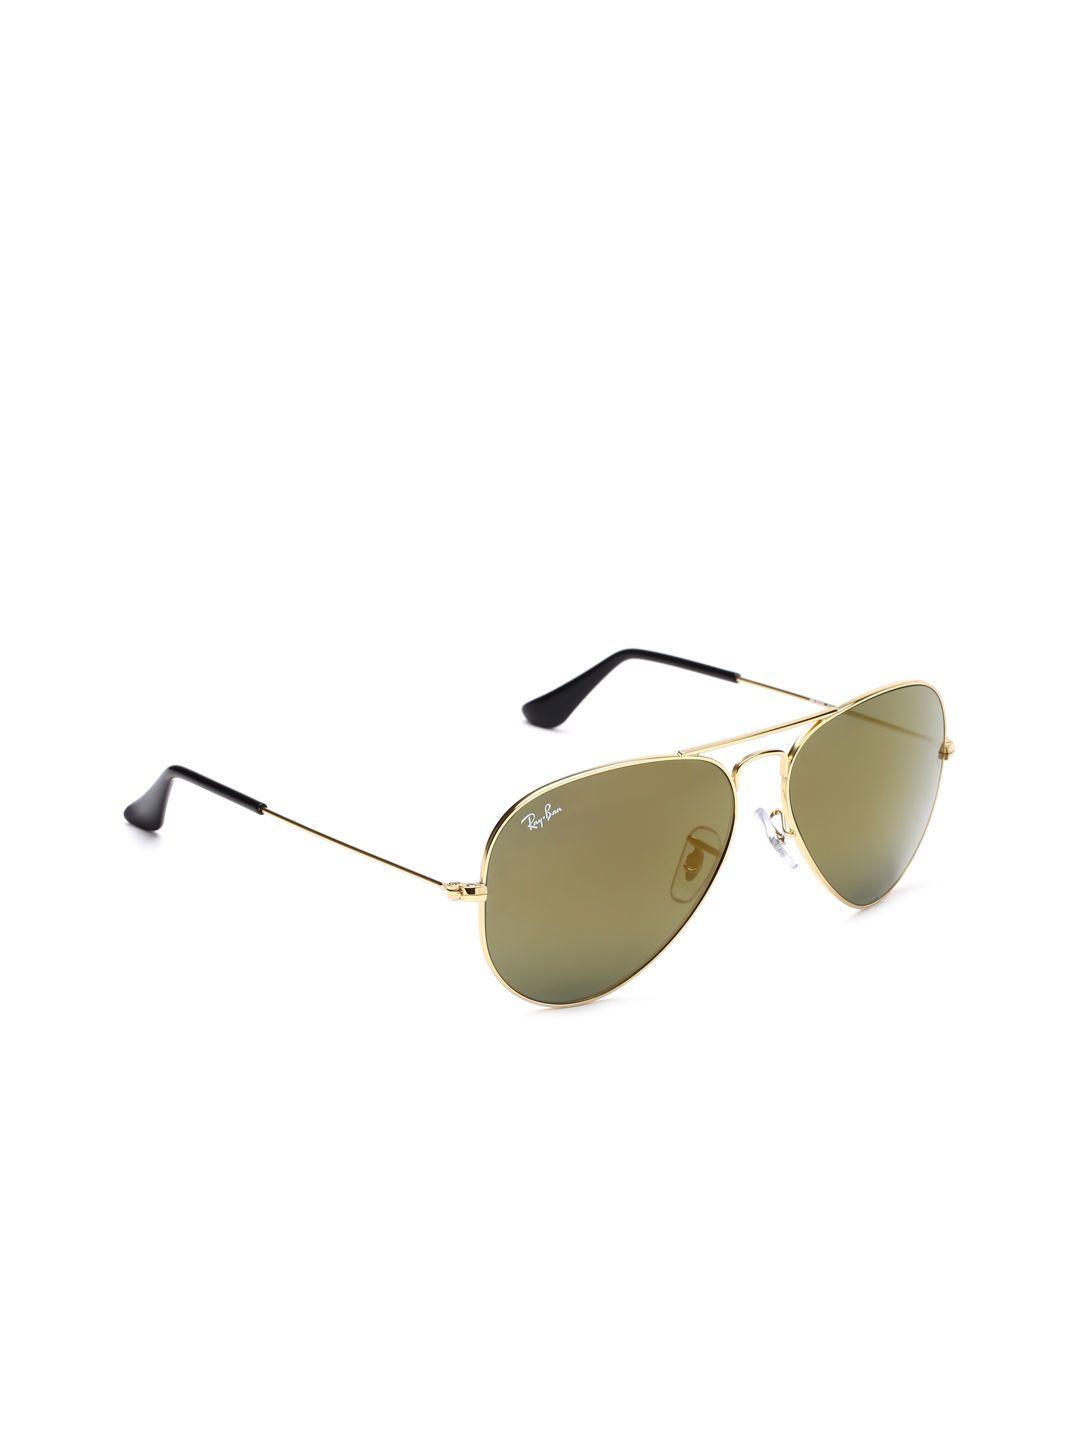 ray-ban unisex aviator sunglasses 0rb3025i